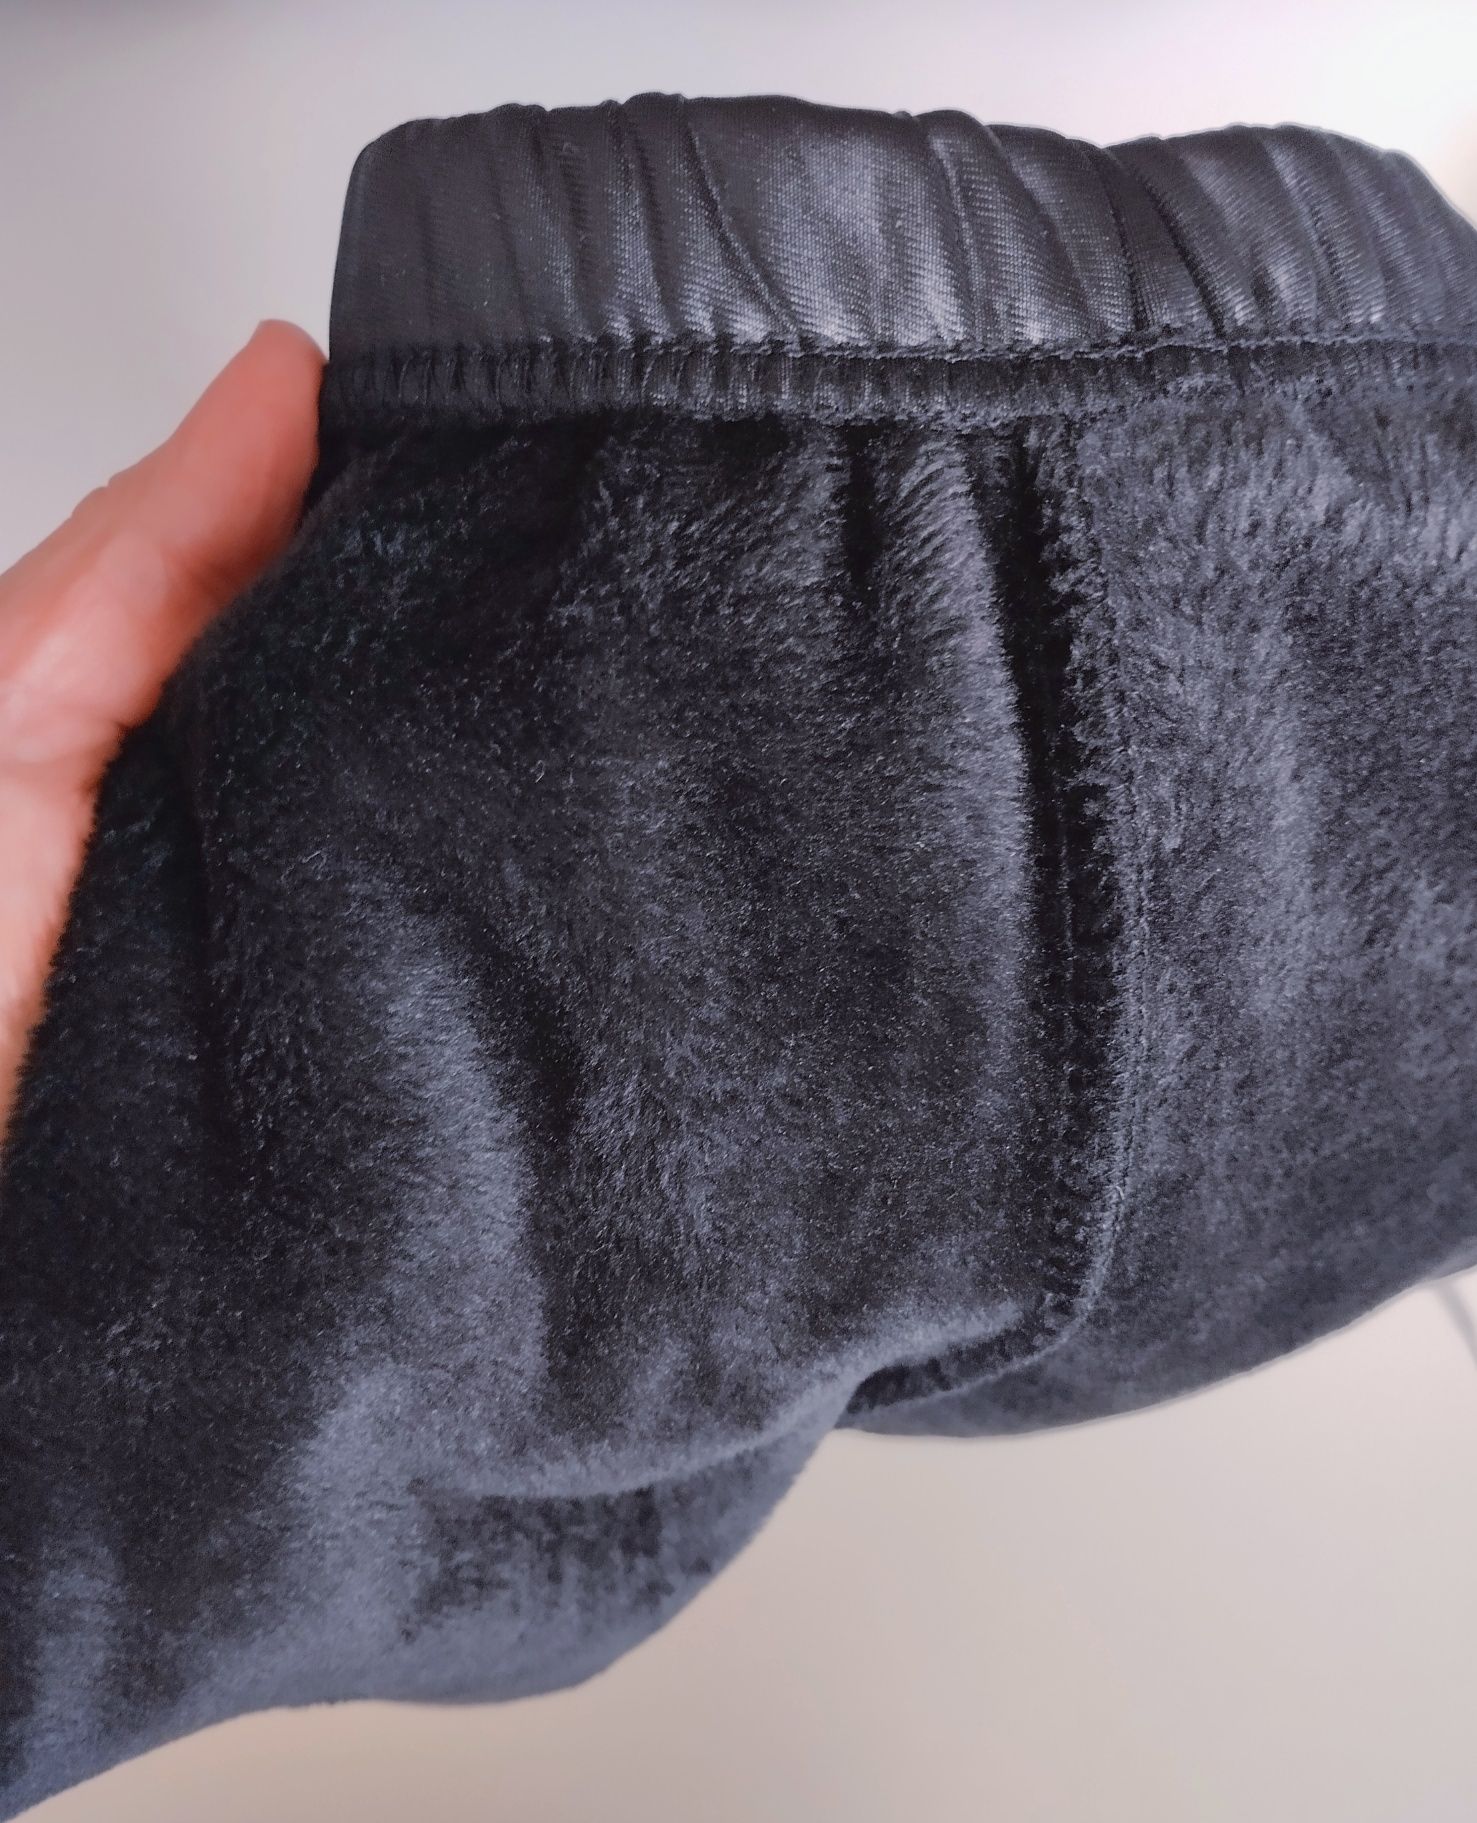 Теплые лосины на меху рейтузы штаны брюки